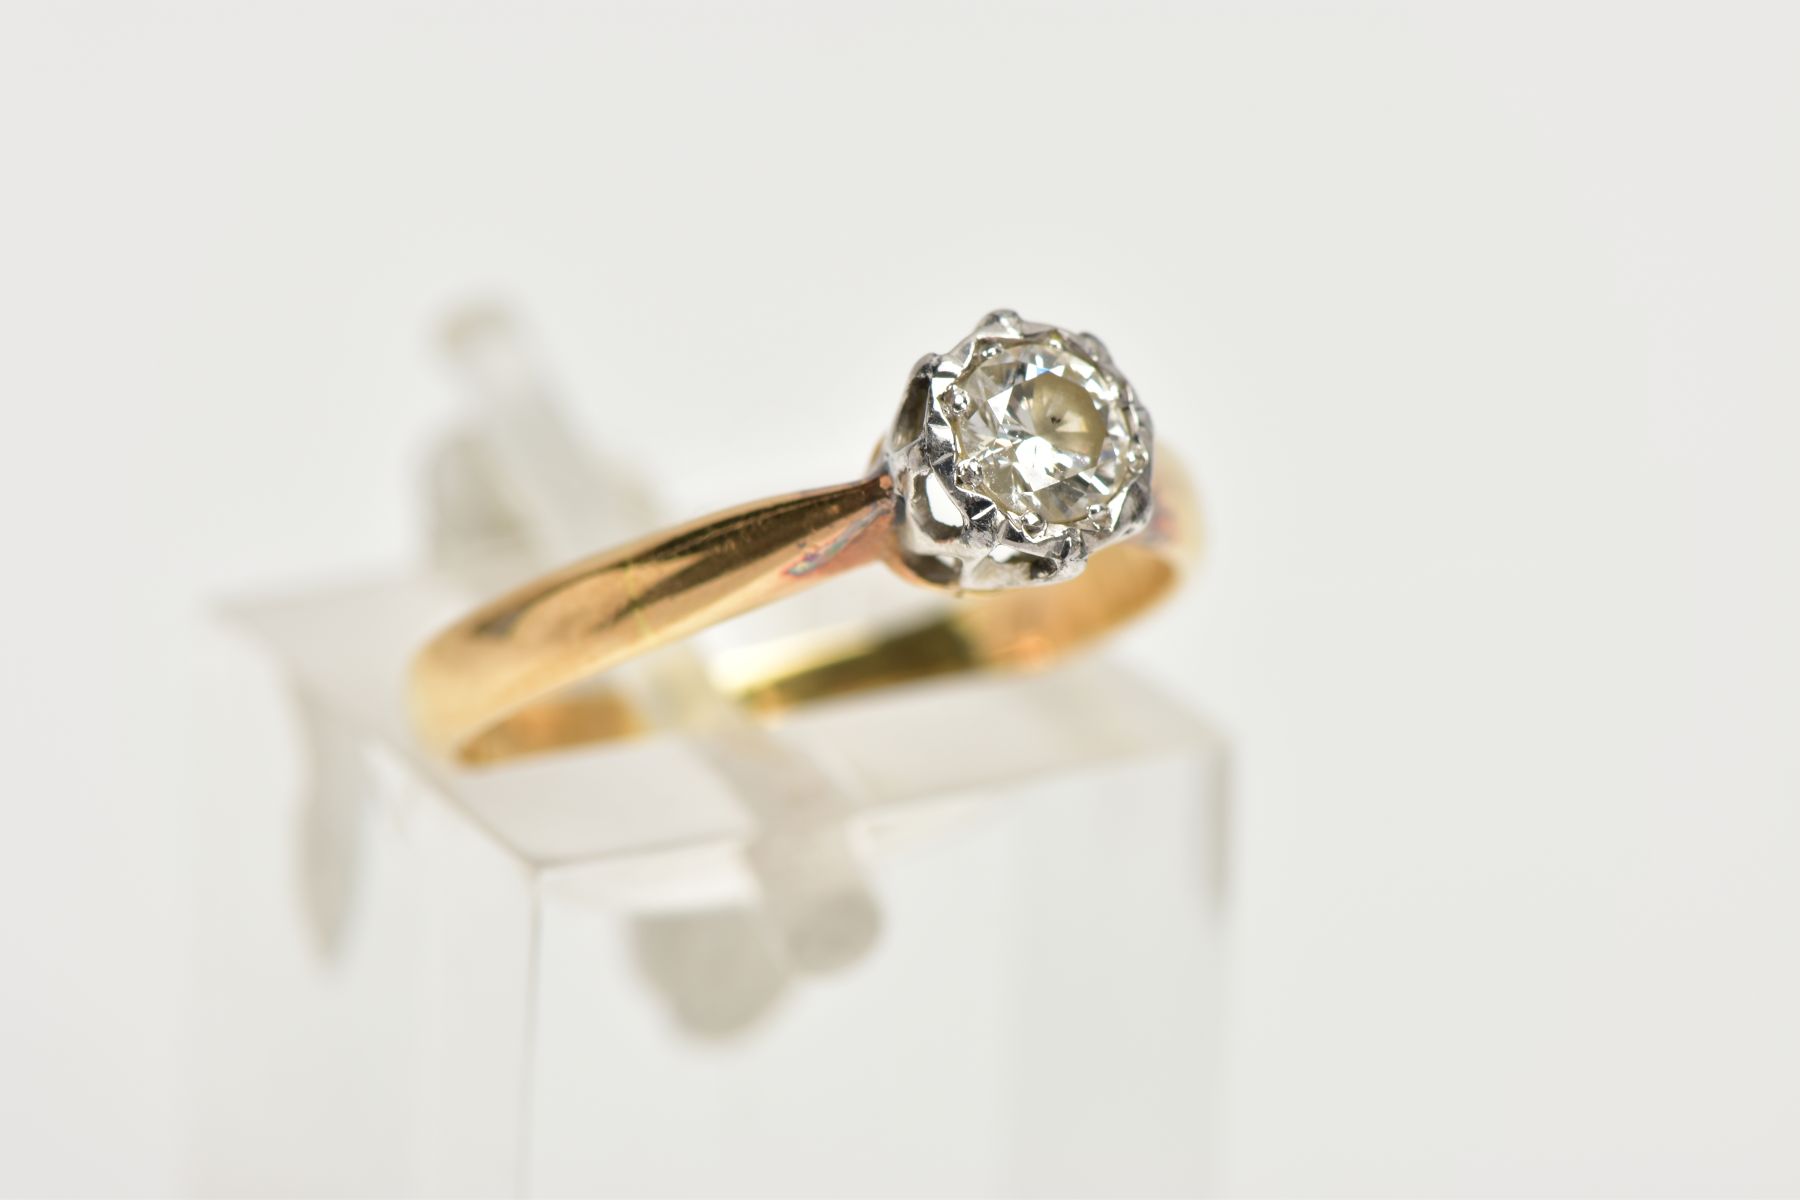 AN 18CT GOLD SINGLE STONE DIAMOND RING, centring on an illusion set round brilliant cut diamond, - Image 4 of 4